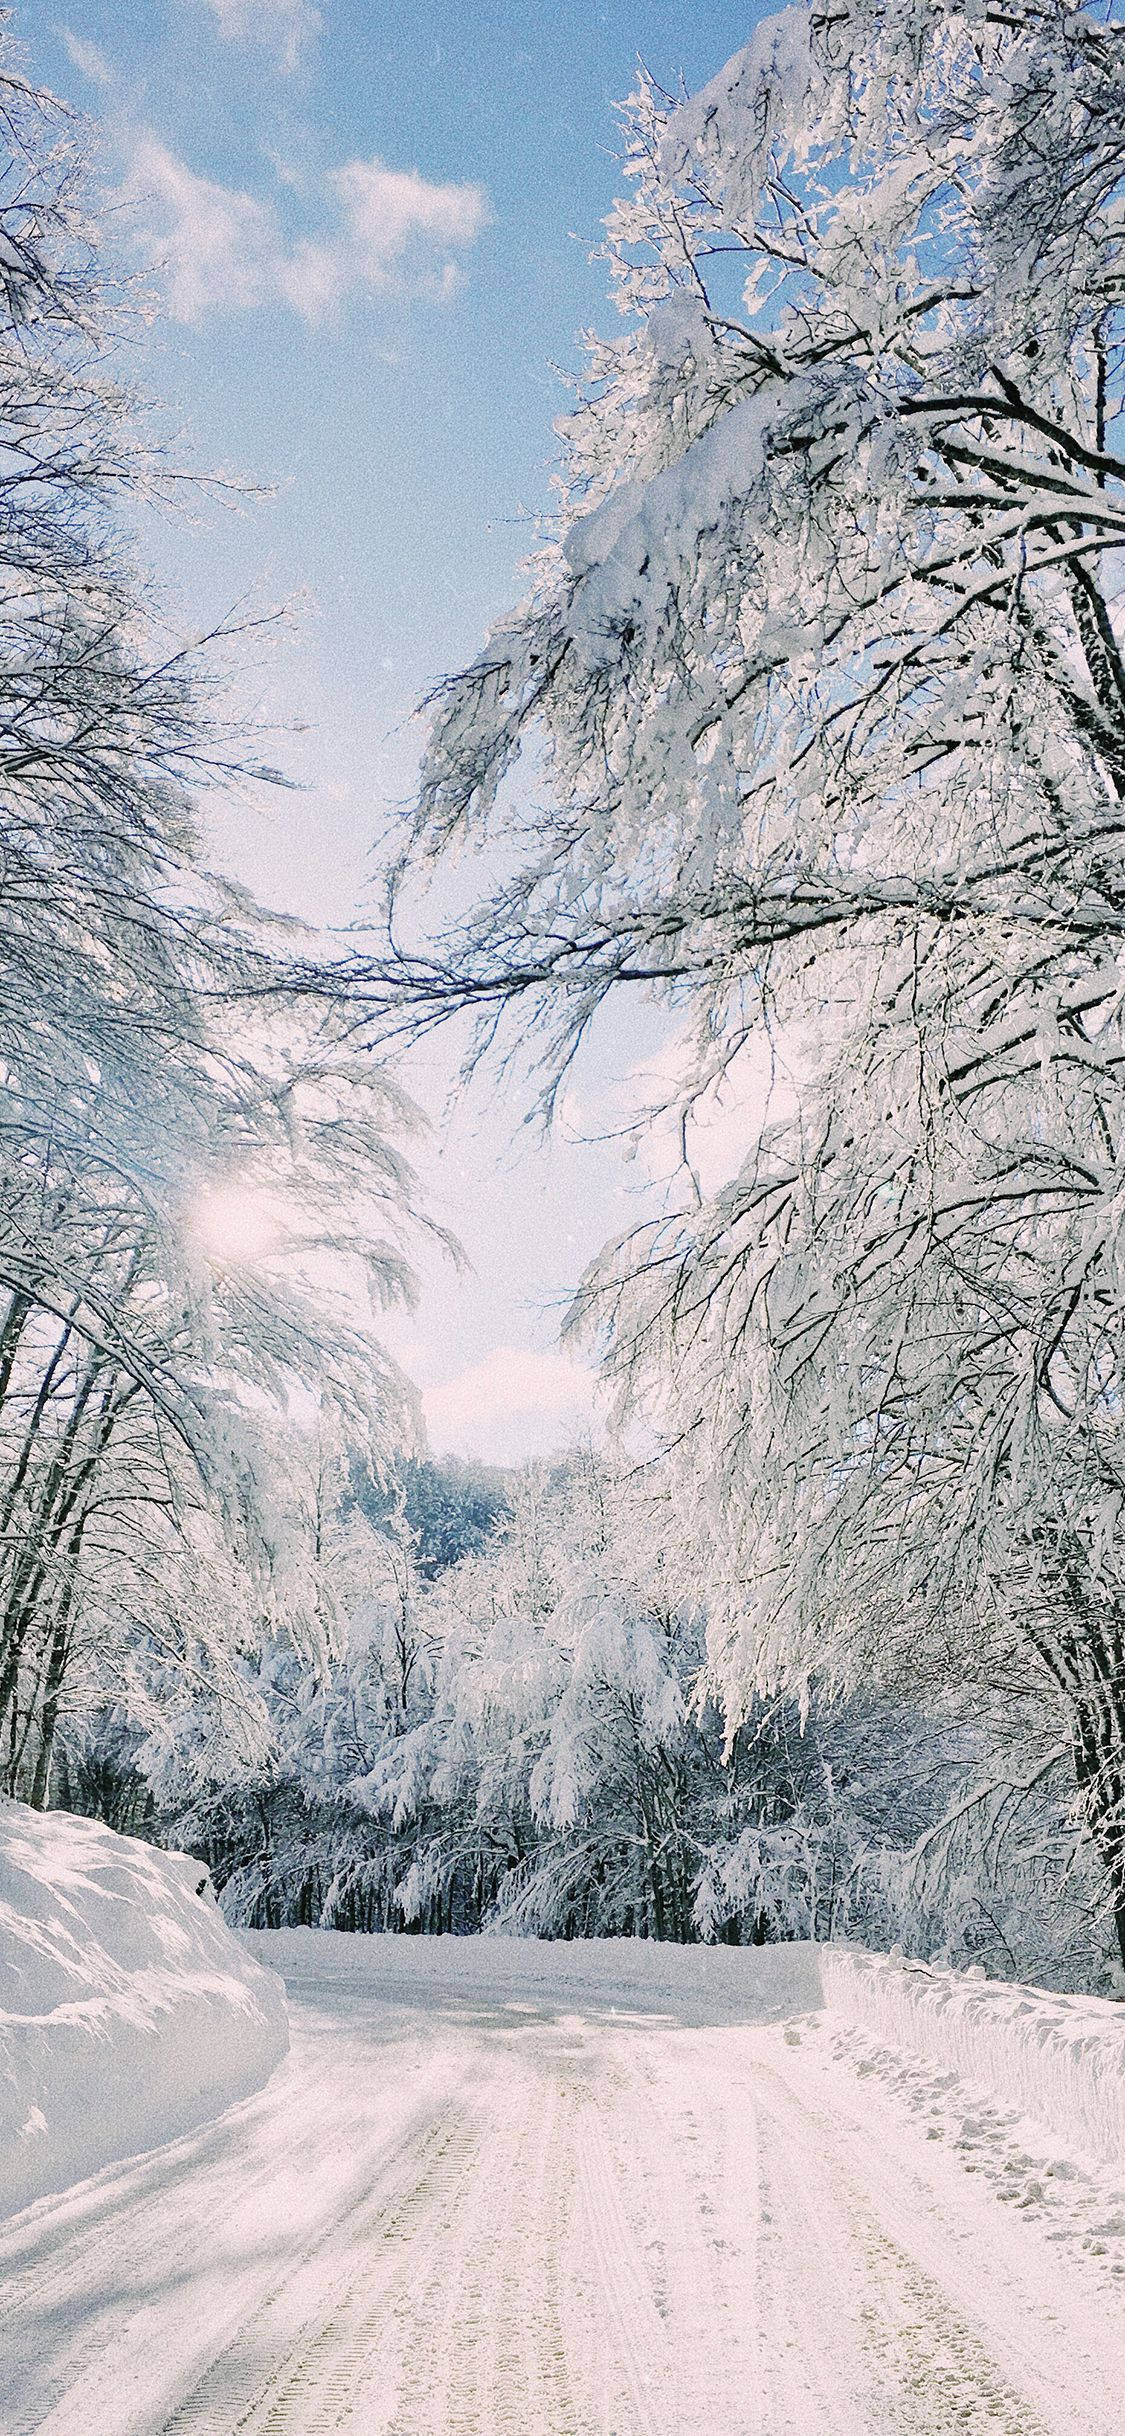 Download Snowy Road Winter iPhone Wallpaper